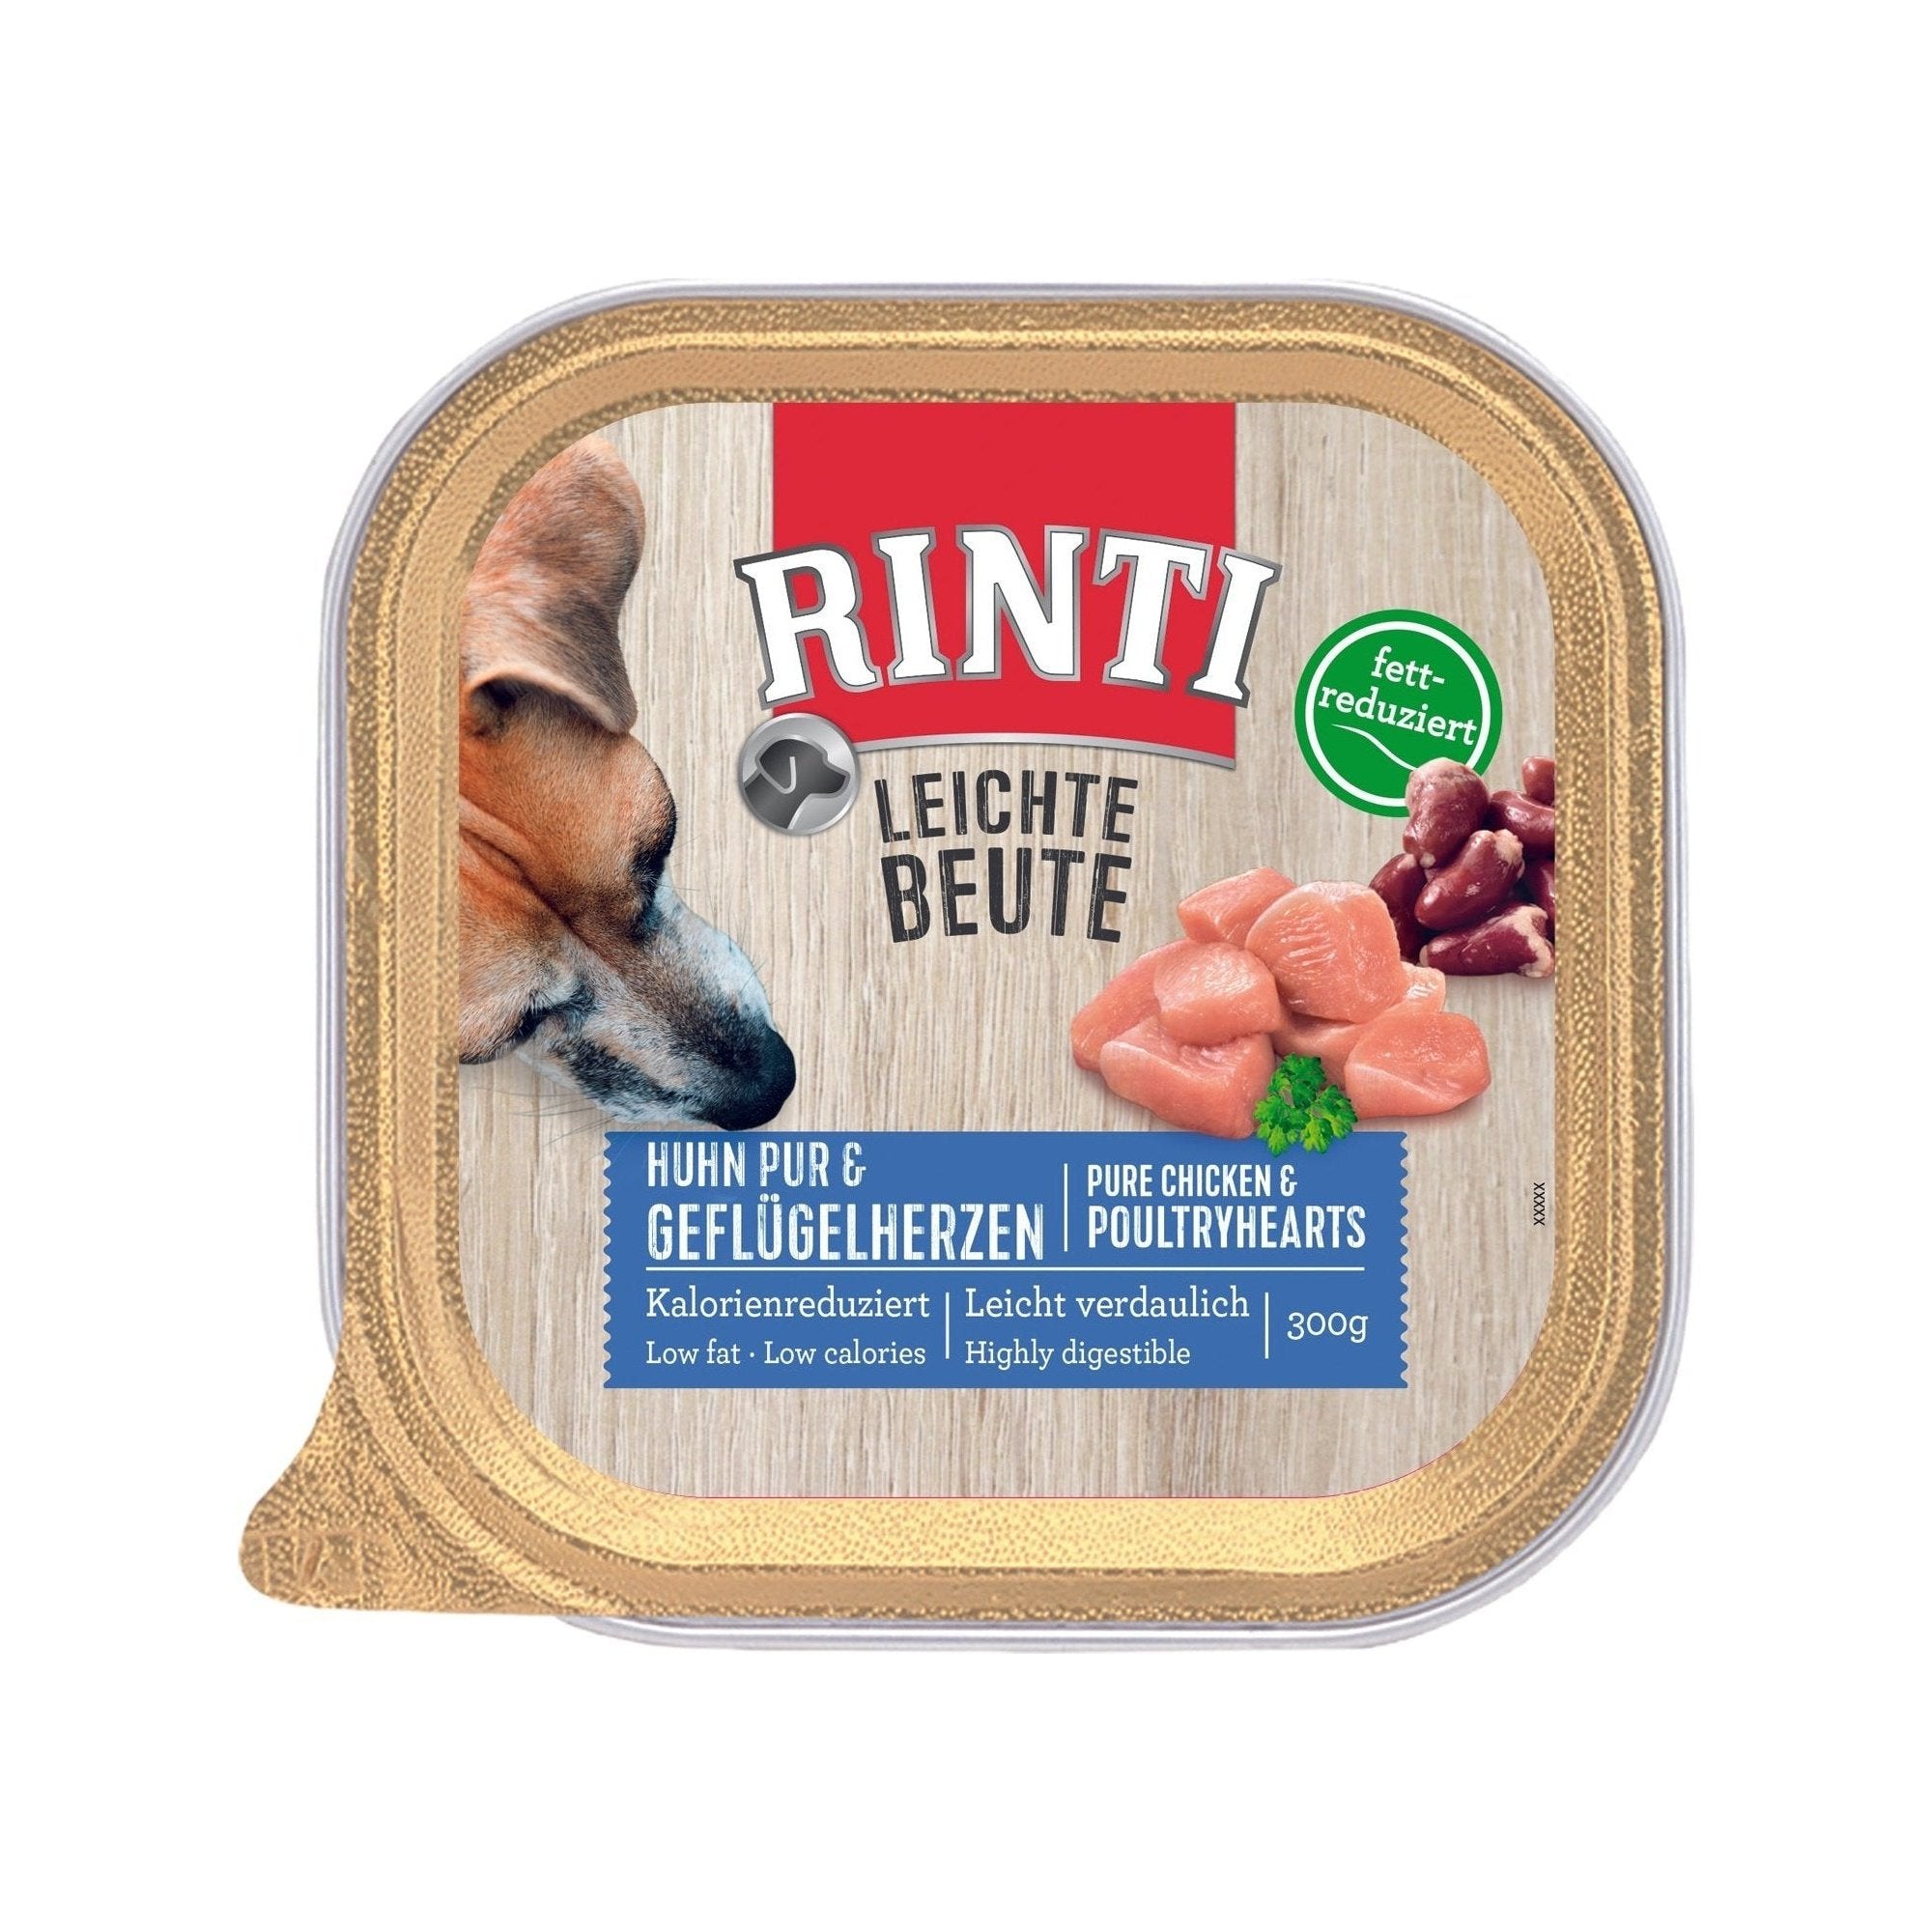 Rinti Leichte Beute Huhn Pur + Geflügelherzen - zoo.de